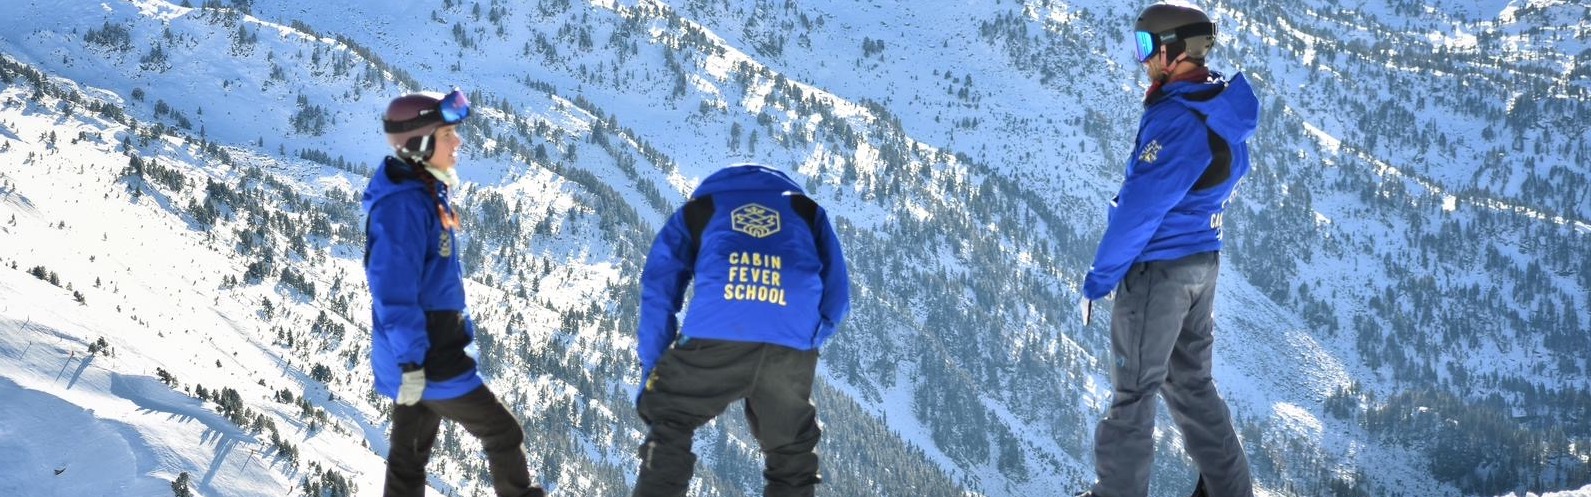 Cabin Fever Snowboard School